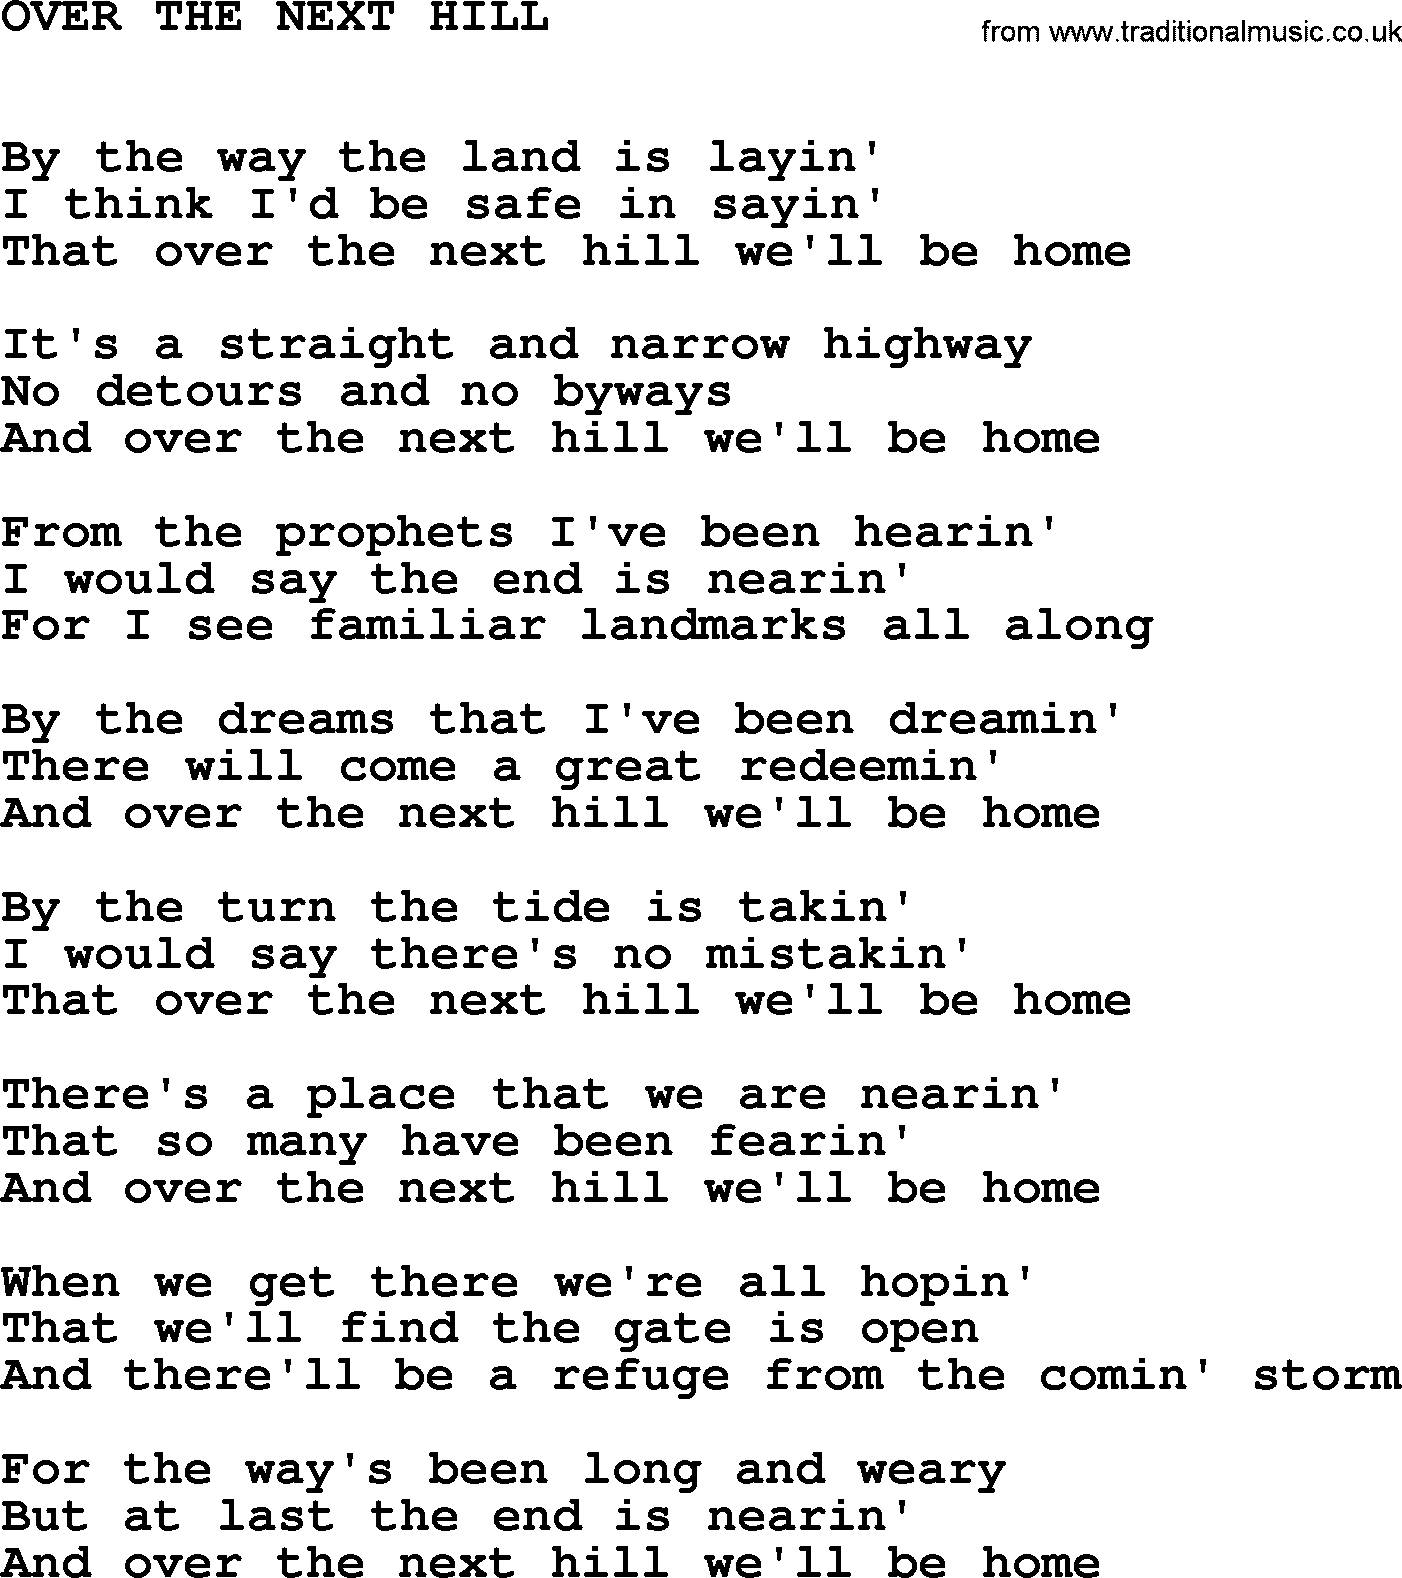 Johnny Cash song Over The Next Hill.txt lyrics